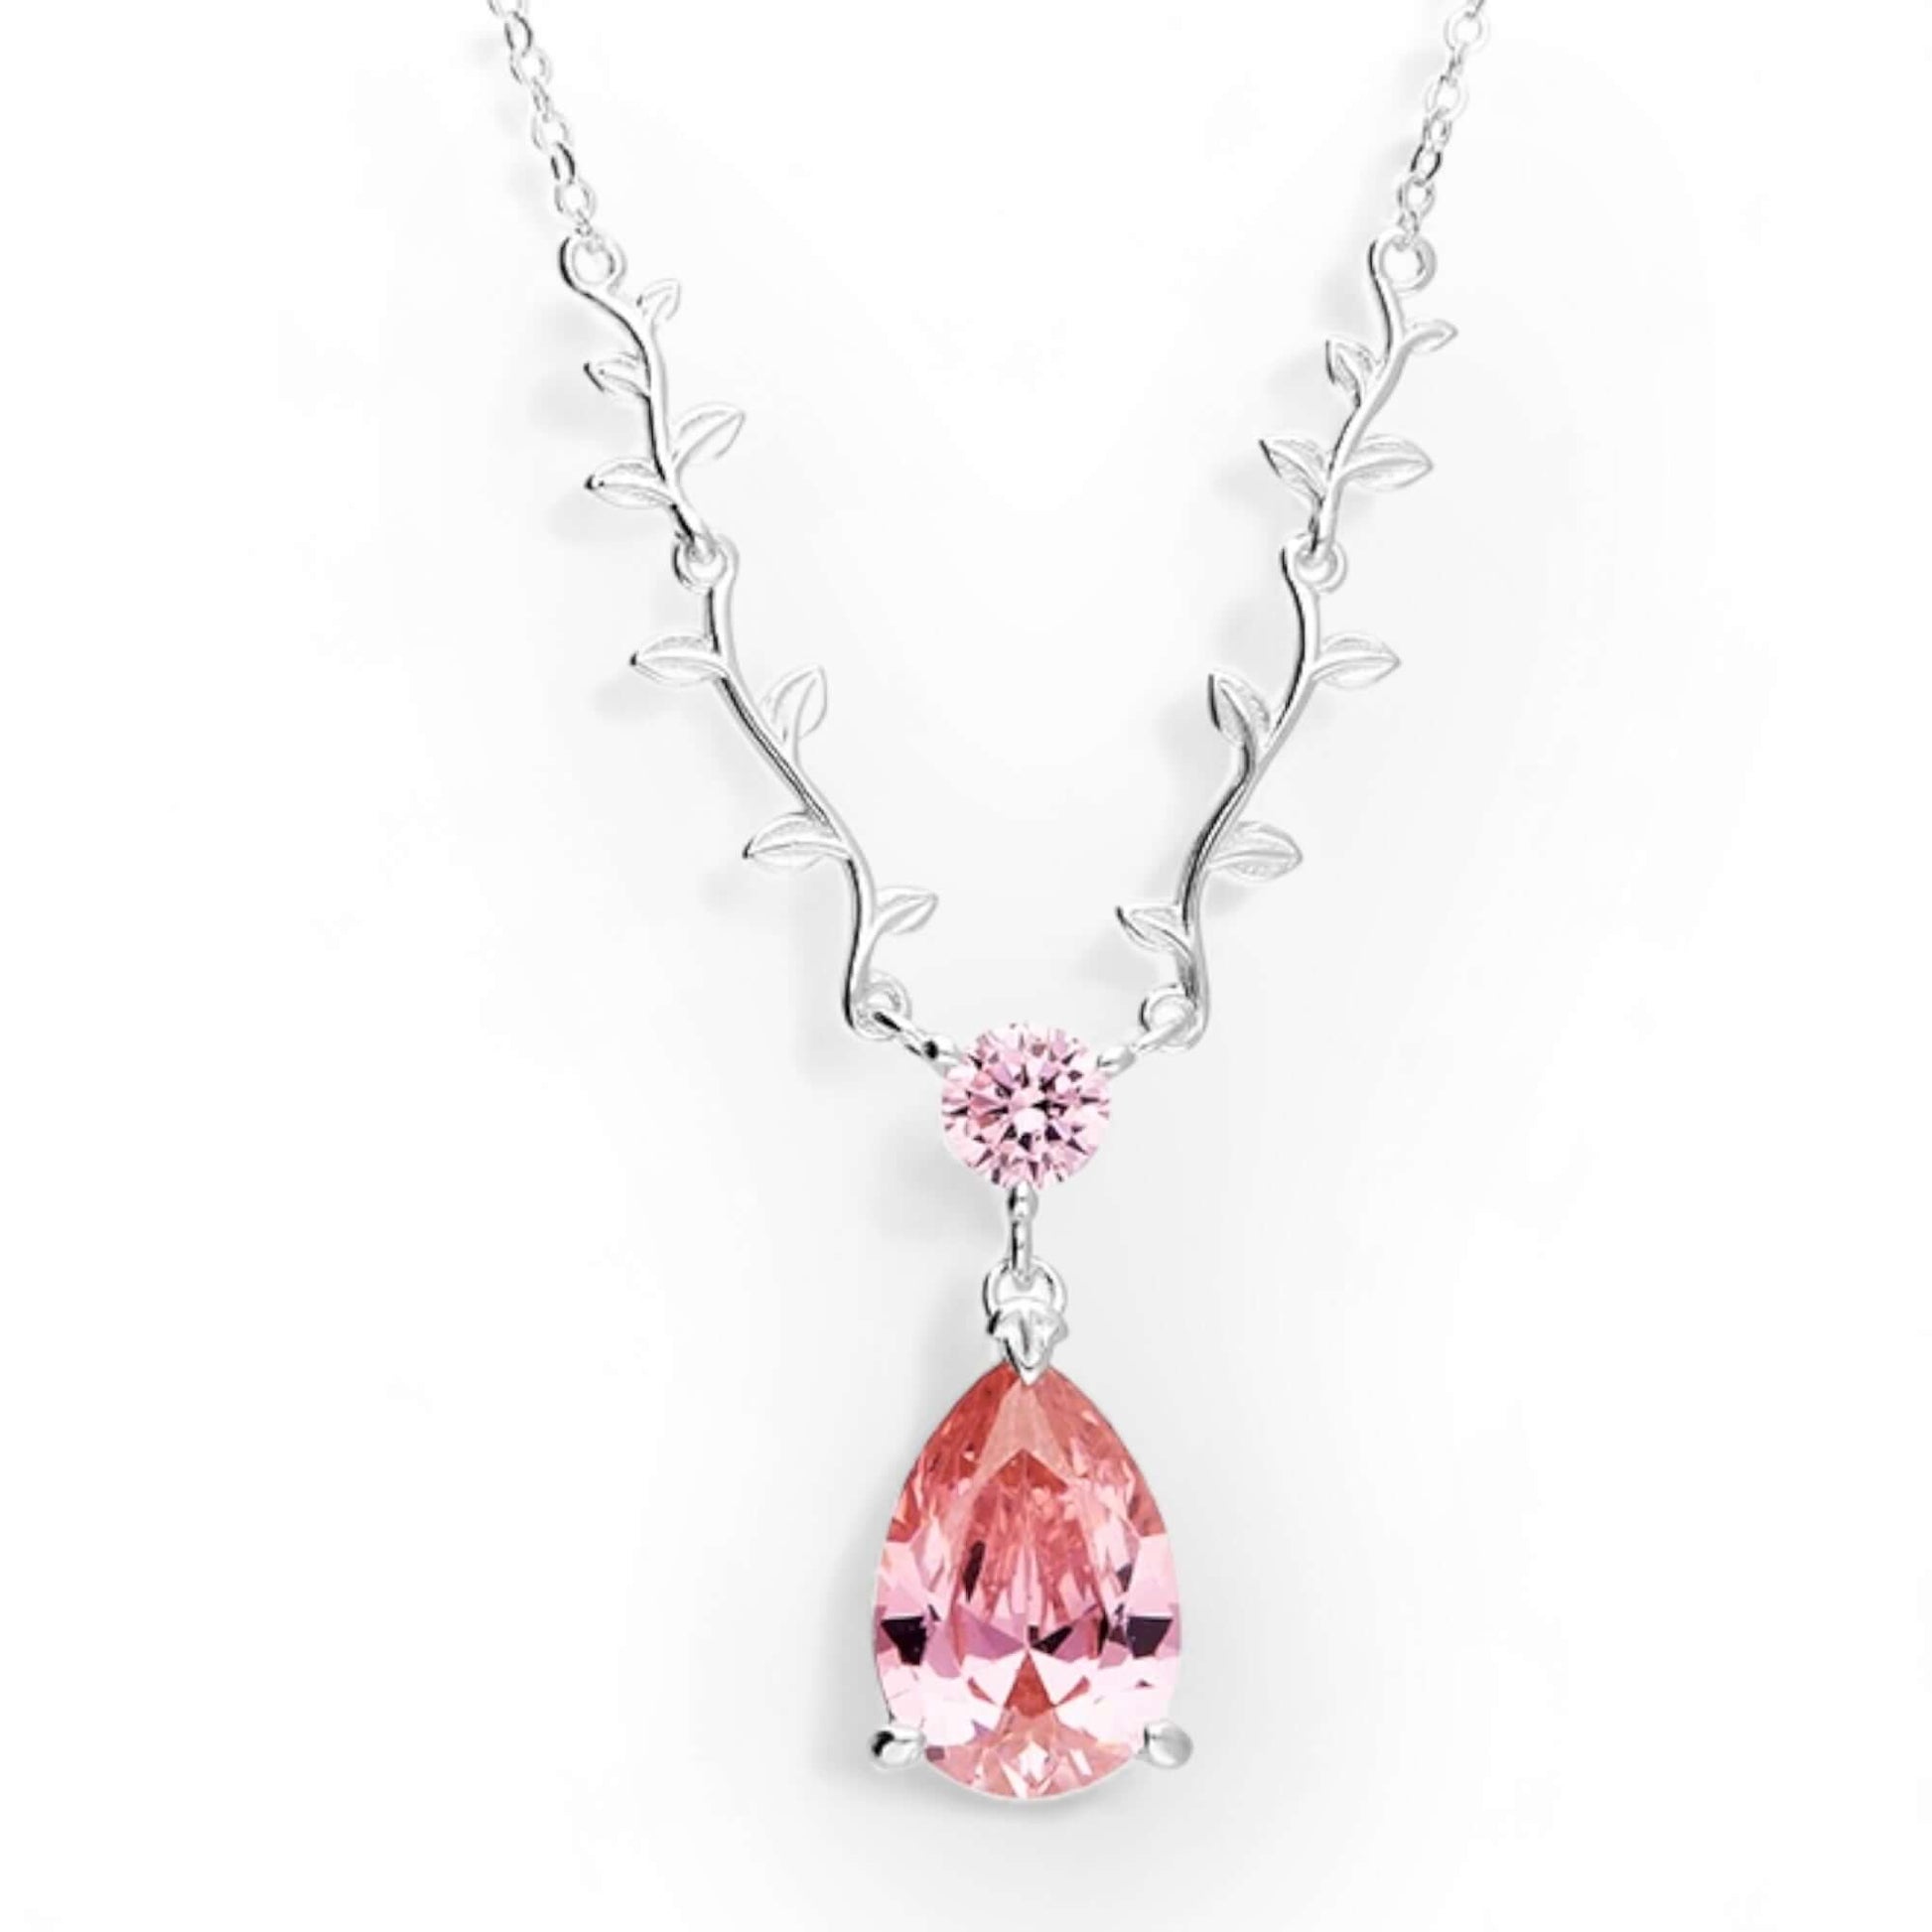 Pink Teardrop Vine leaf Necklace in Sterling Silver - Twelve Silver Trees